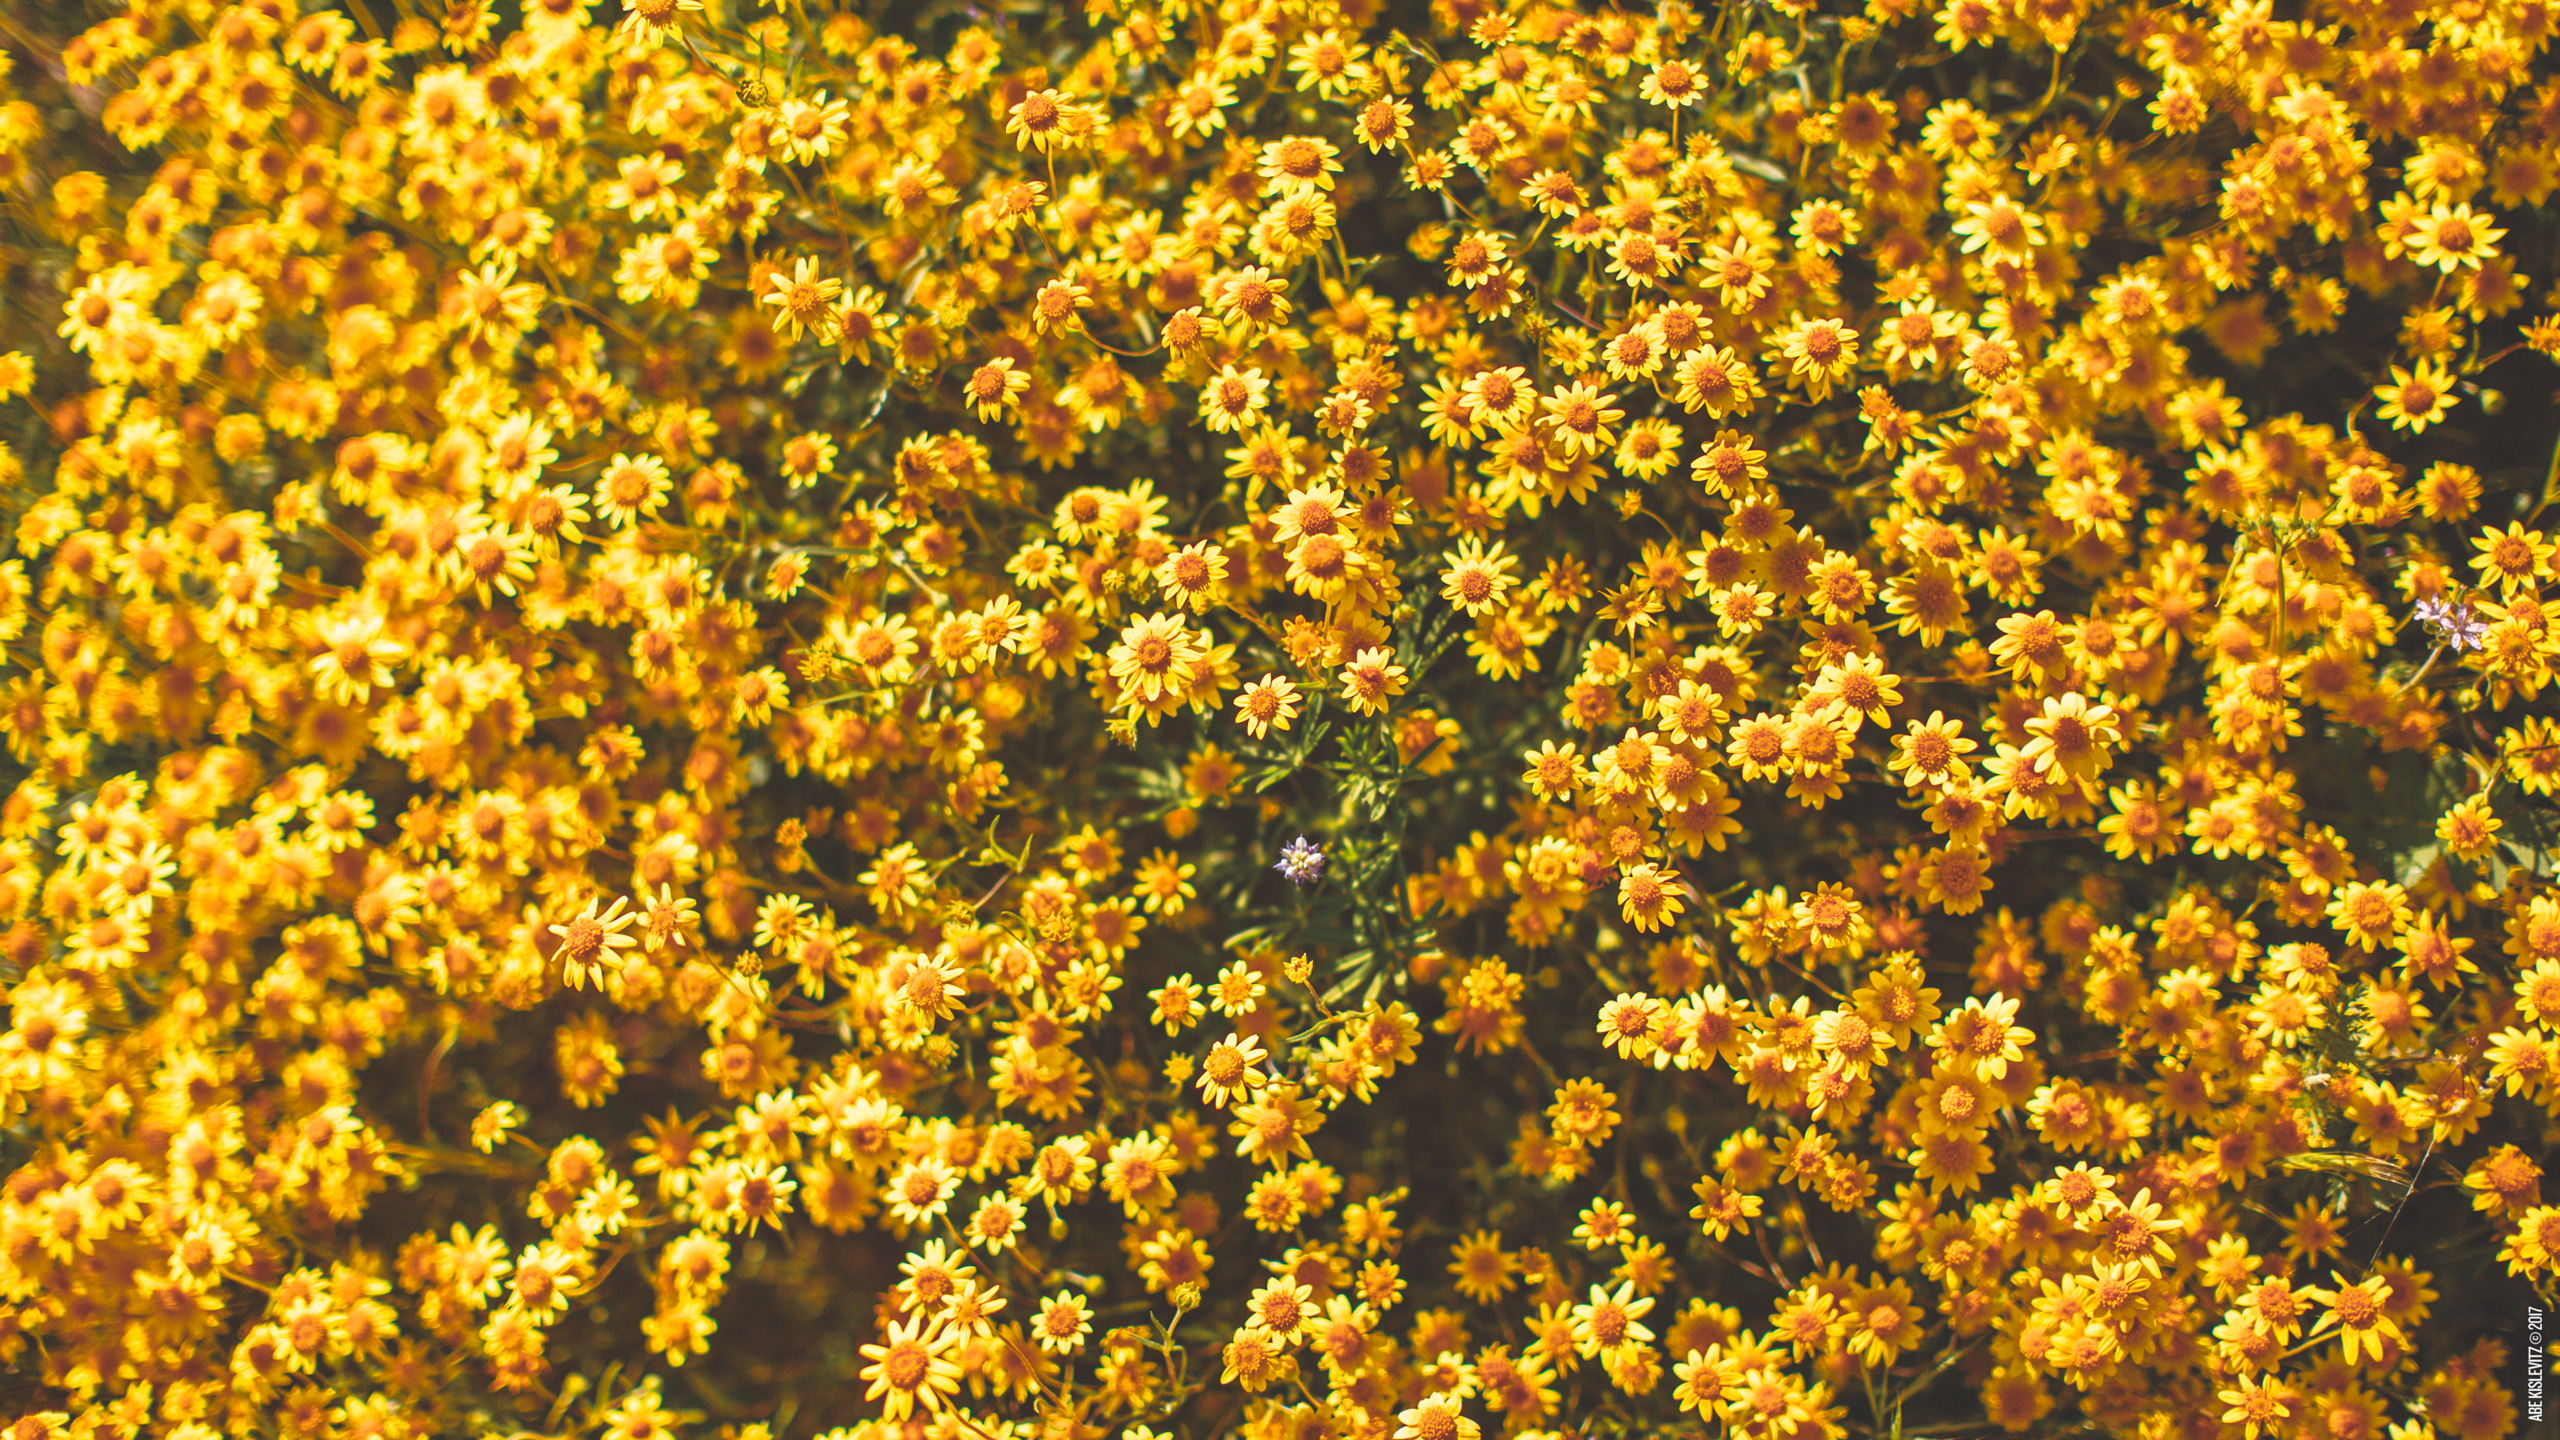 macbook wallpaper,flower,plant,yellow,flowering plant,wildflower